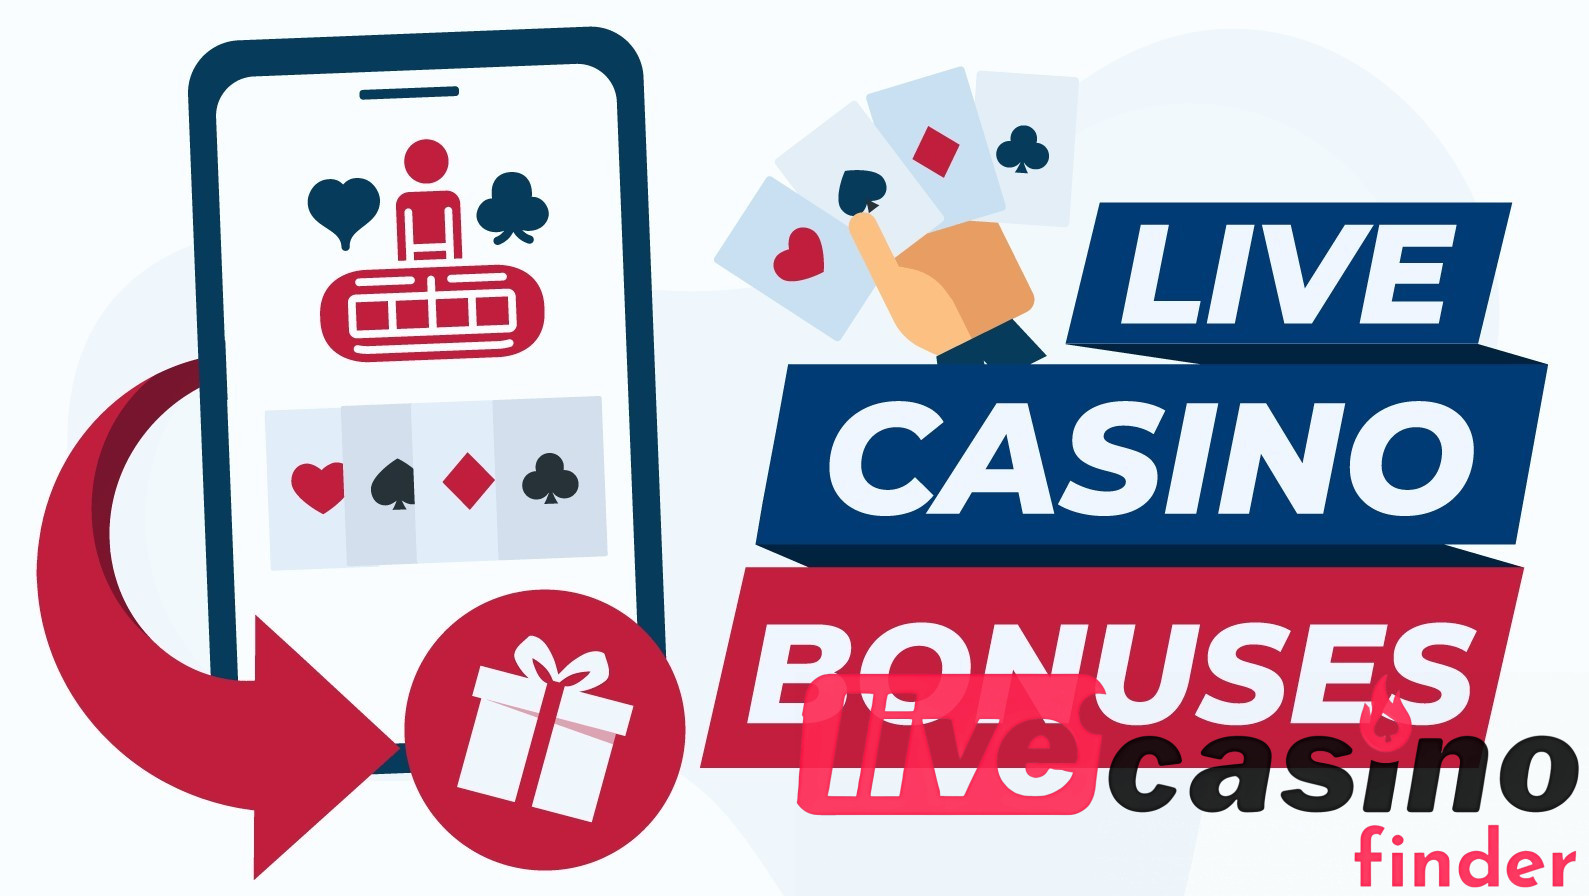 Live casino with bonuses.